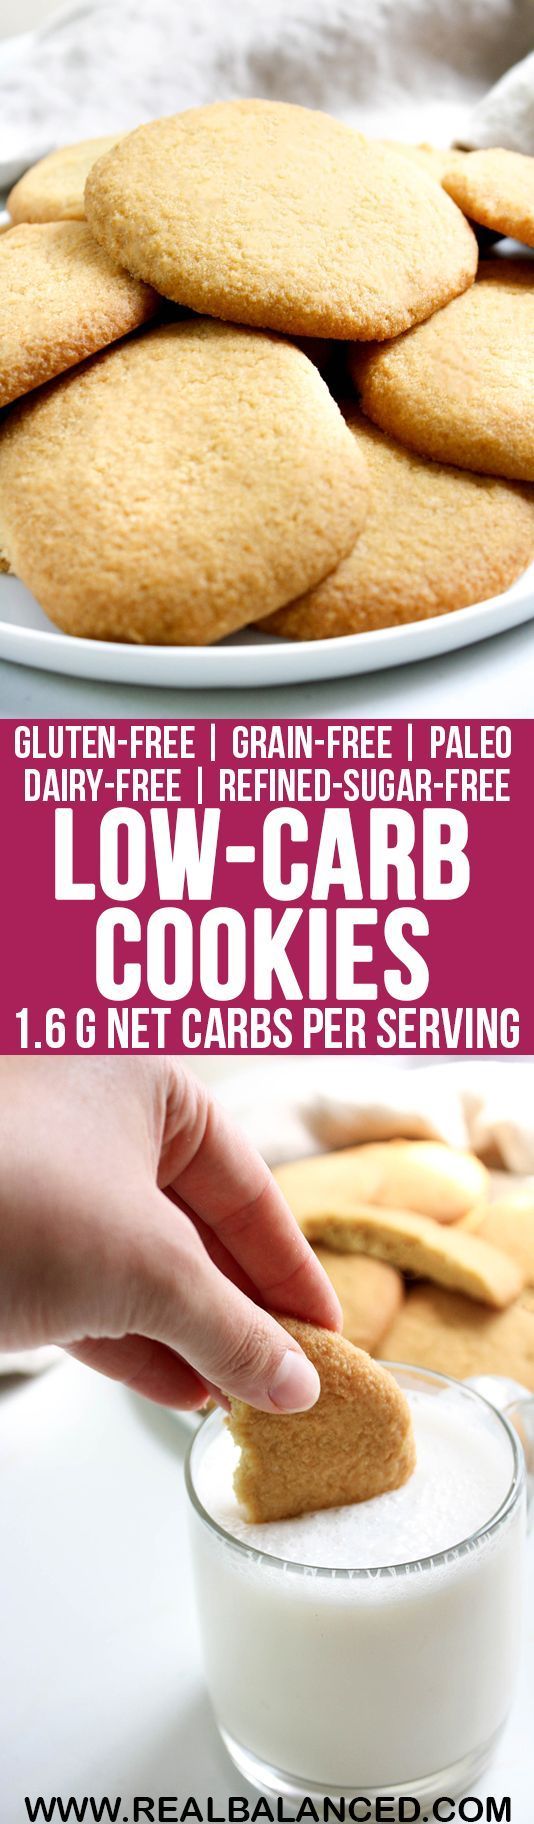 Low-Carb Cookies: low-carb, keto, paleo, gluten-free, grain-free, dairy-free, vegetarian, & refined-sugar-free! 1.6g net carbs per